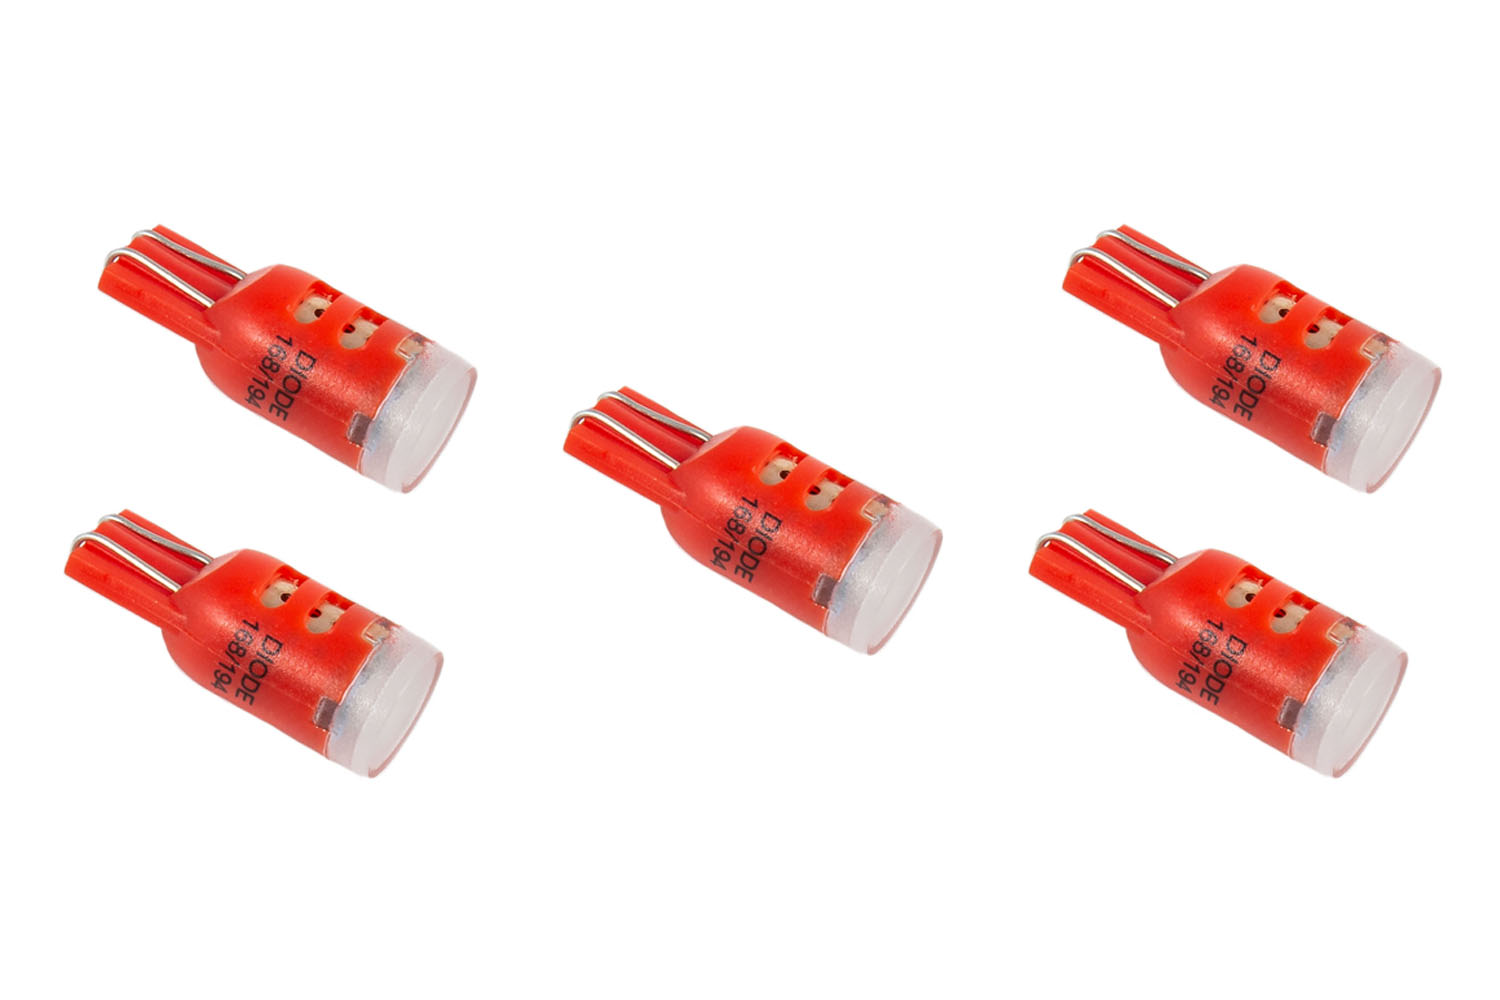 194 LED Bulb HP5 Red (five) Diode Dynamics